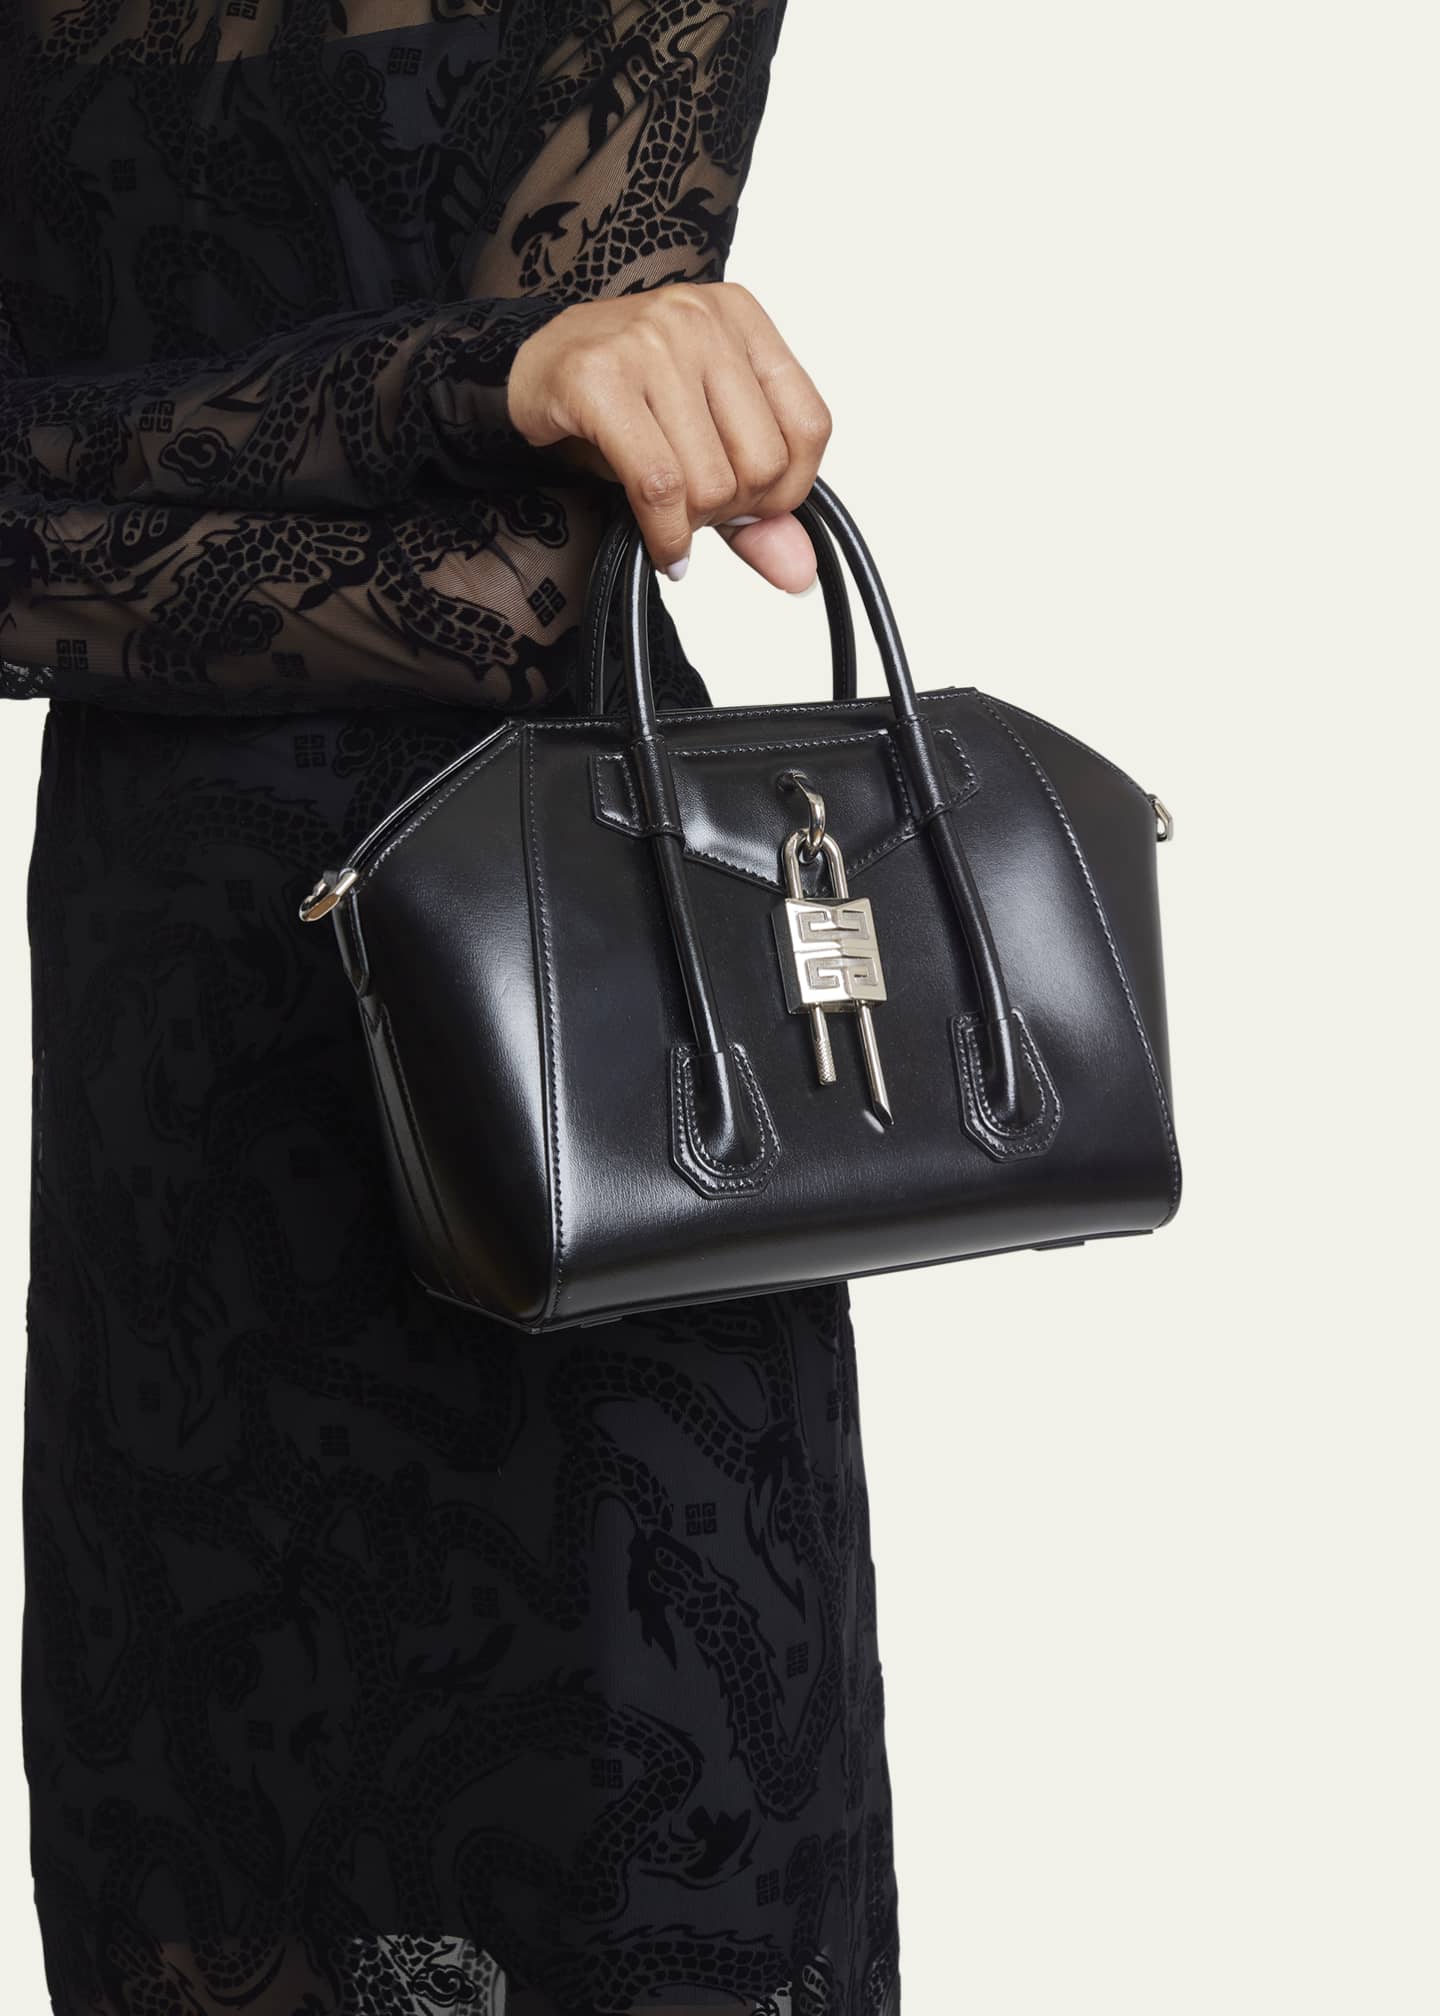 Antigona mini leather tote bag, Givenchy